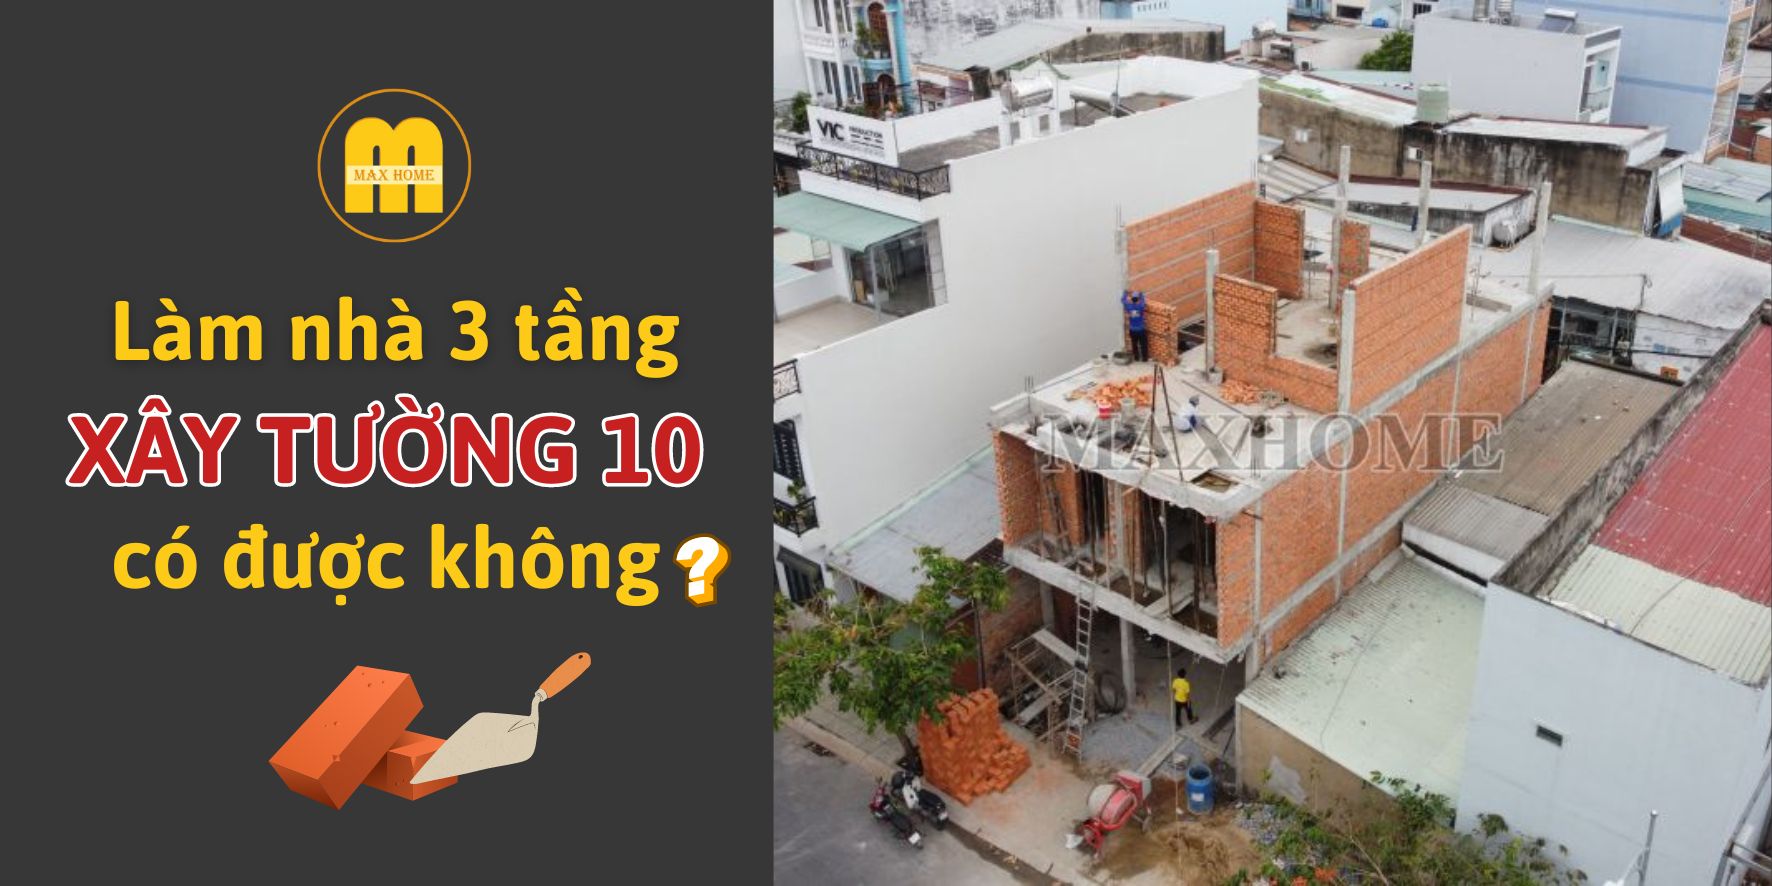 am-nha-3-tang-xay-tuong-10-co-duoc-khong